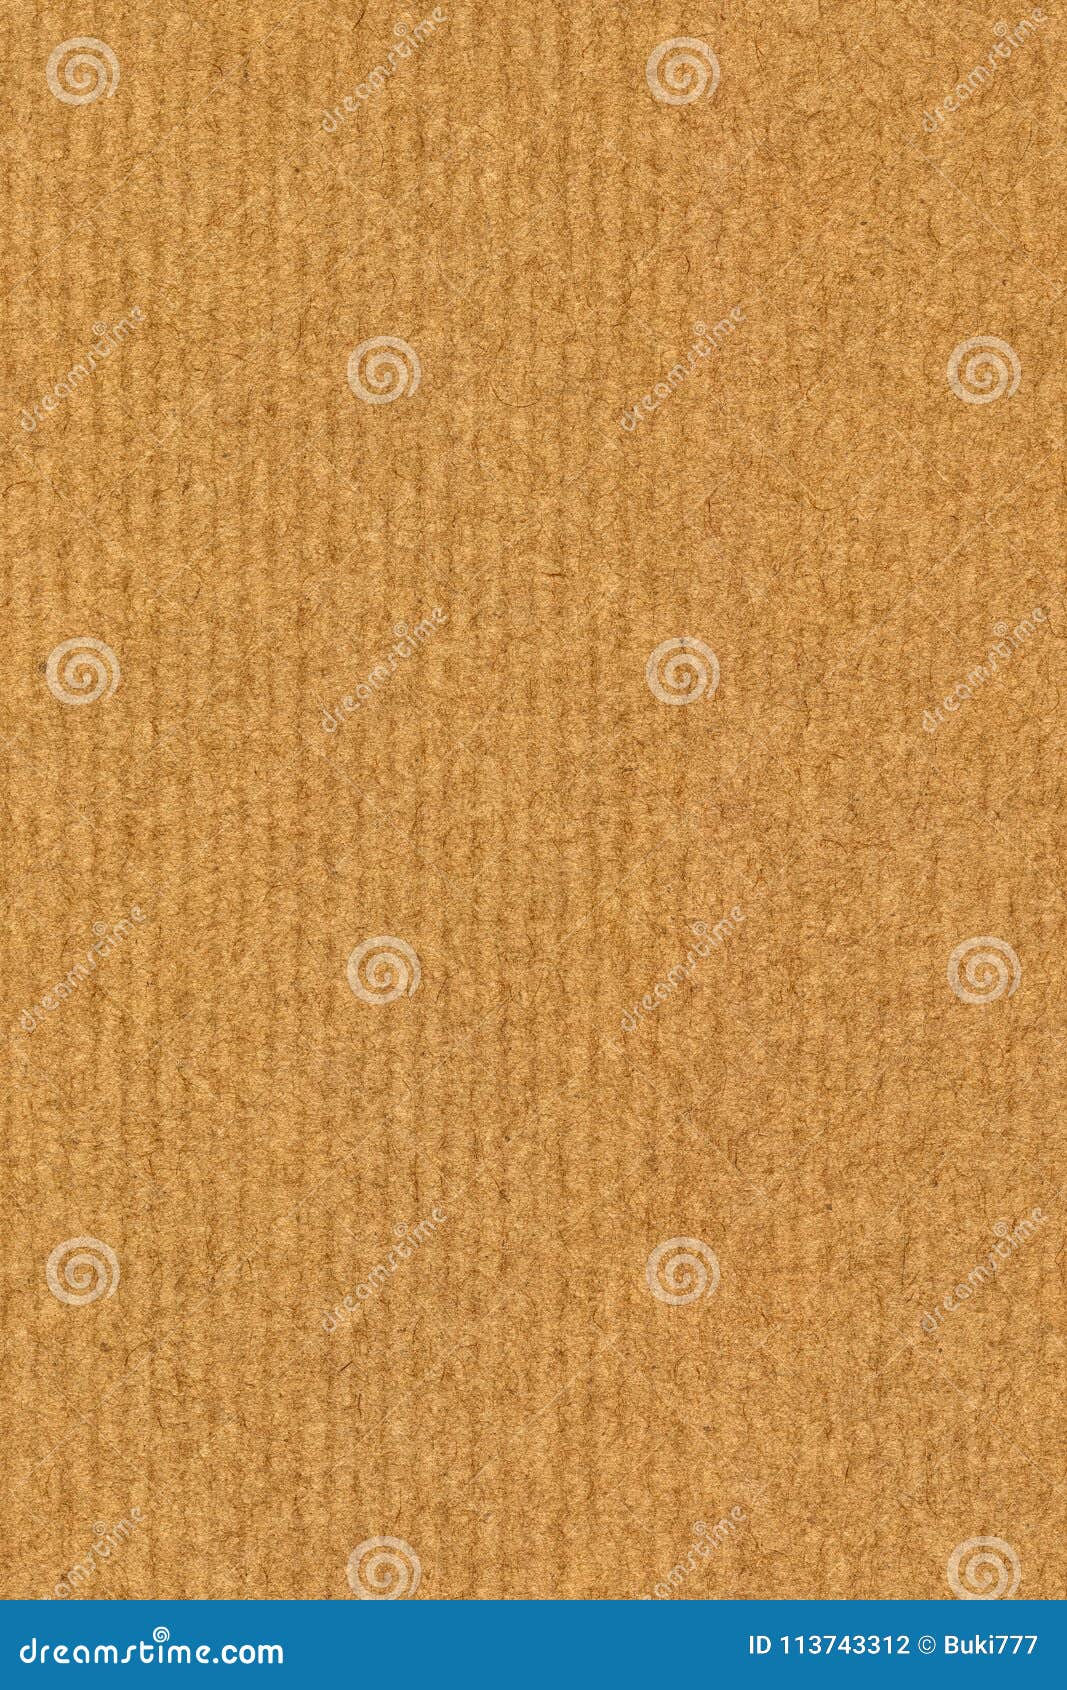 Recycle Brown Kraft Paper Coarse Grain Grunge Texture Stock Photo